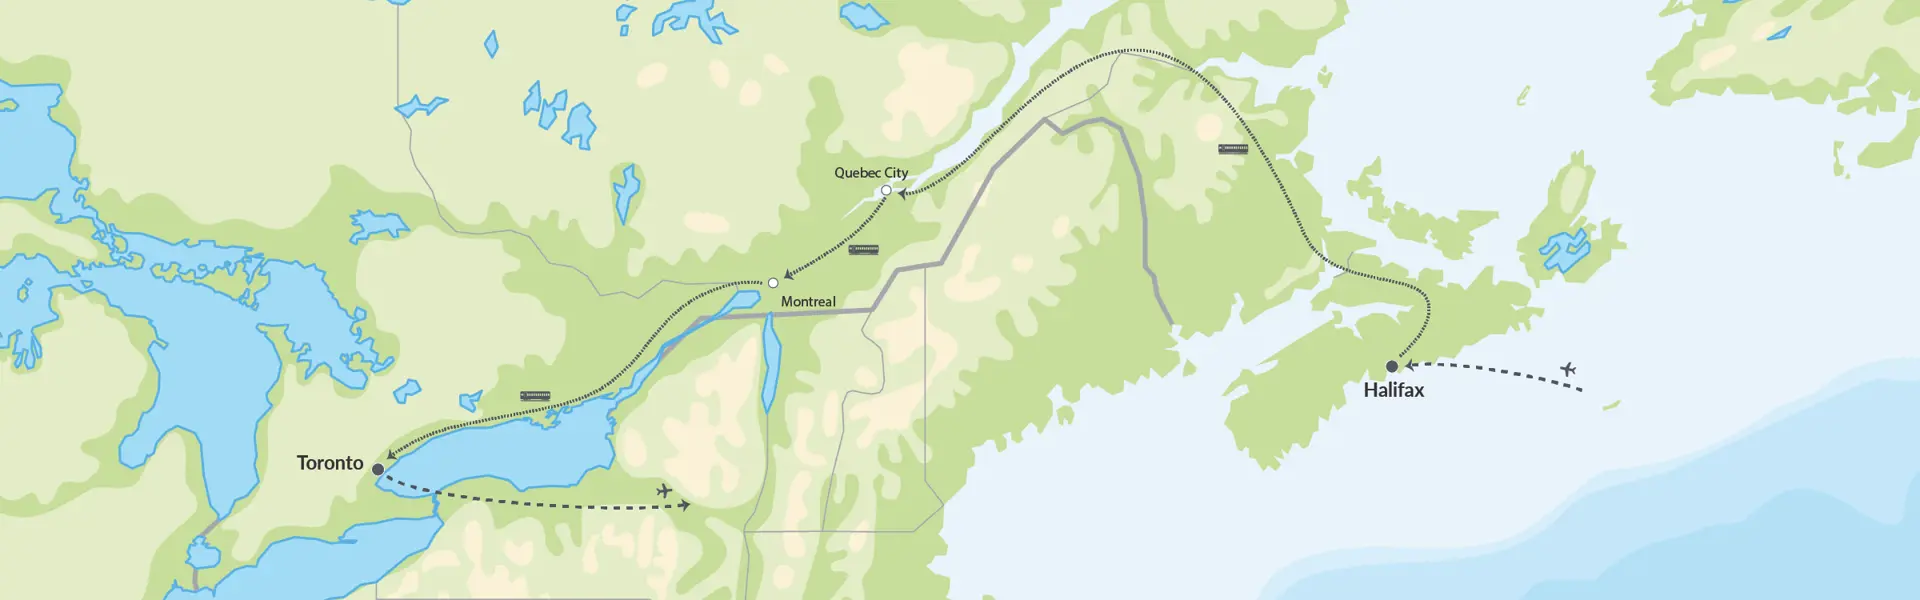 111152 Tog Halifax Quebec City Montreal Toronto Niagara Falls Map